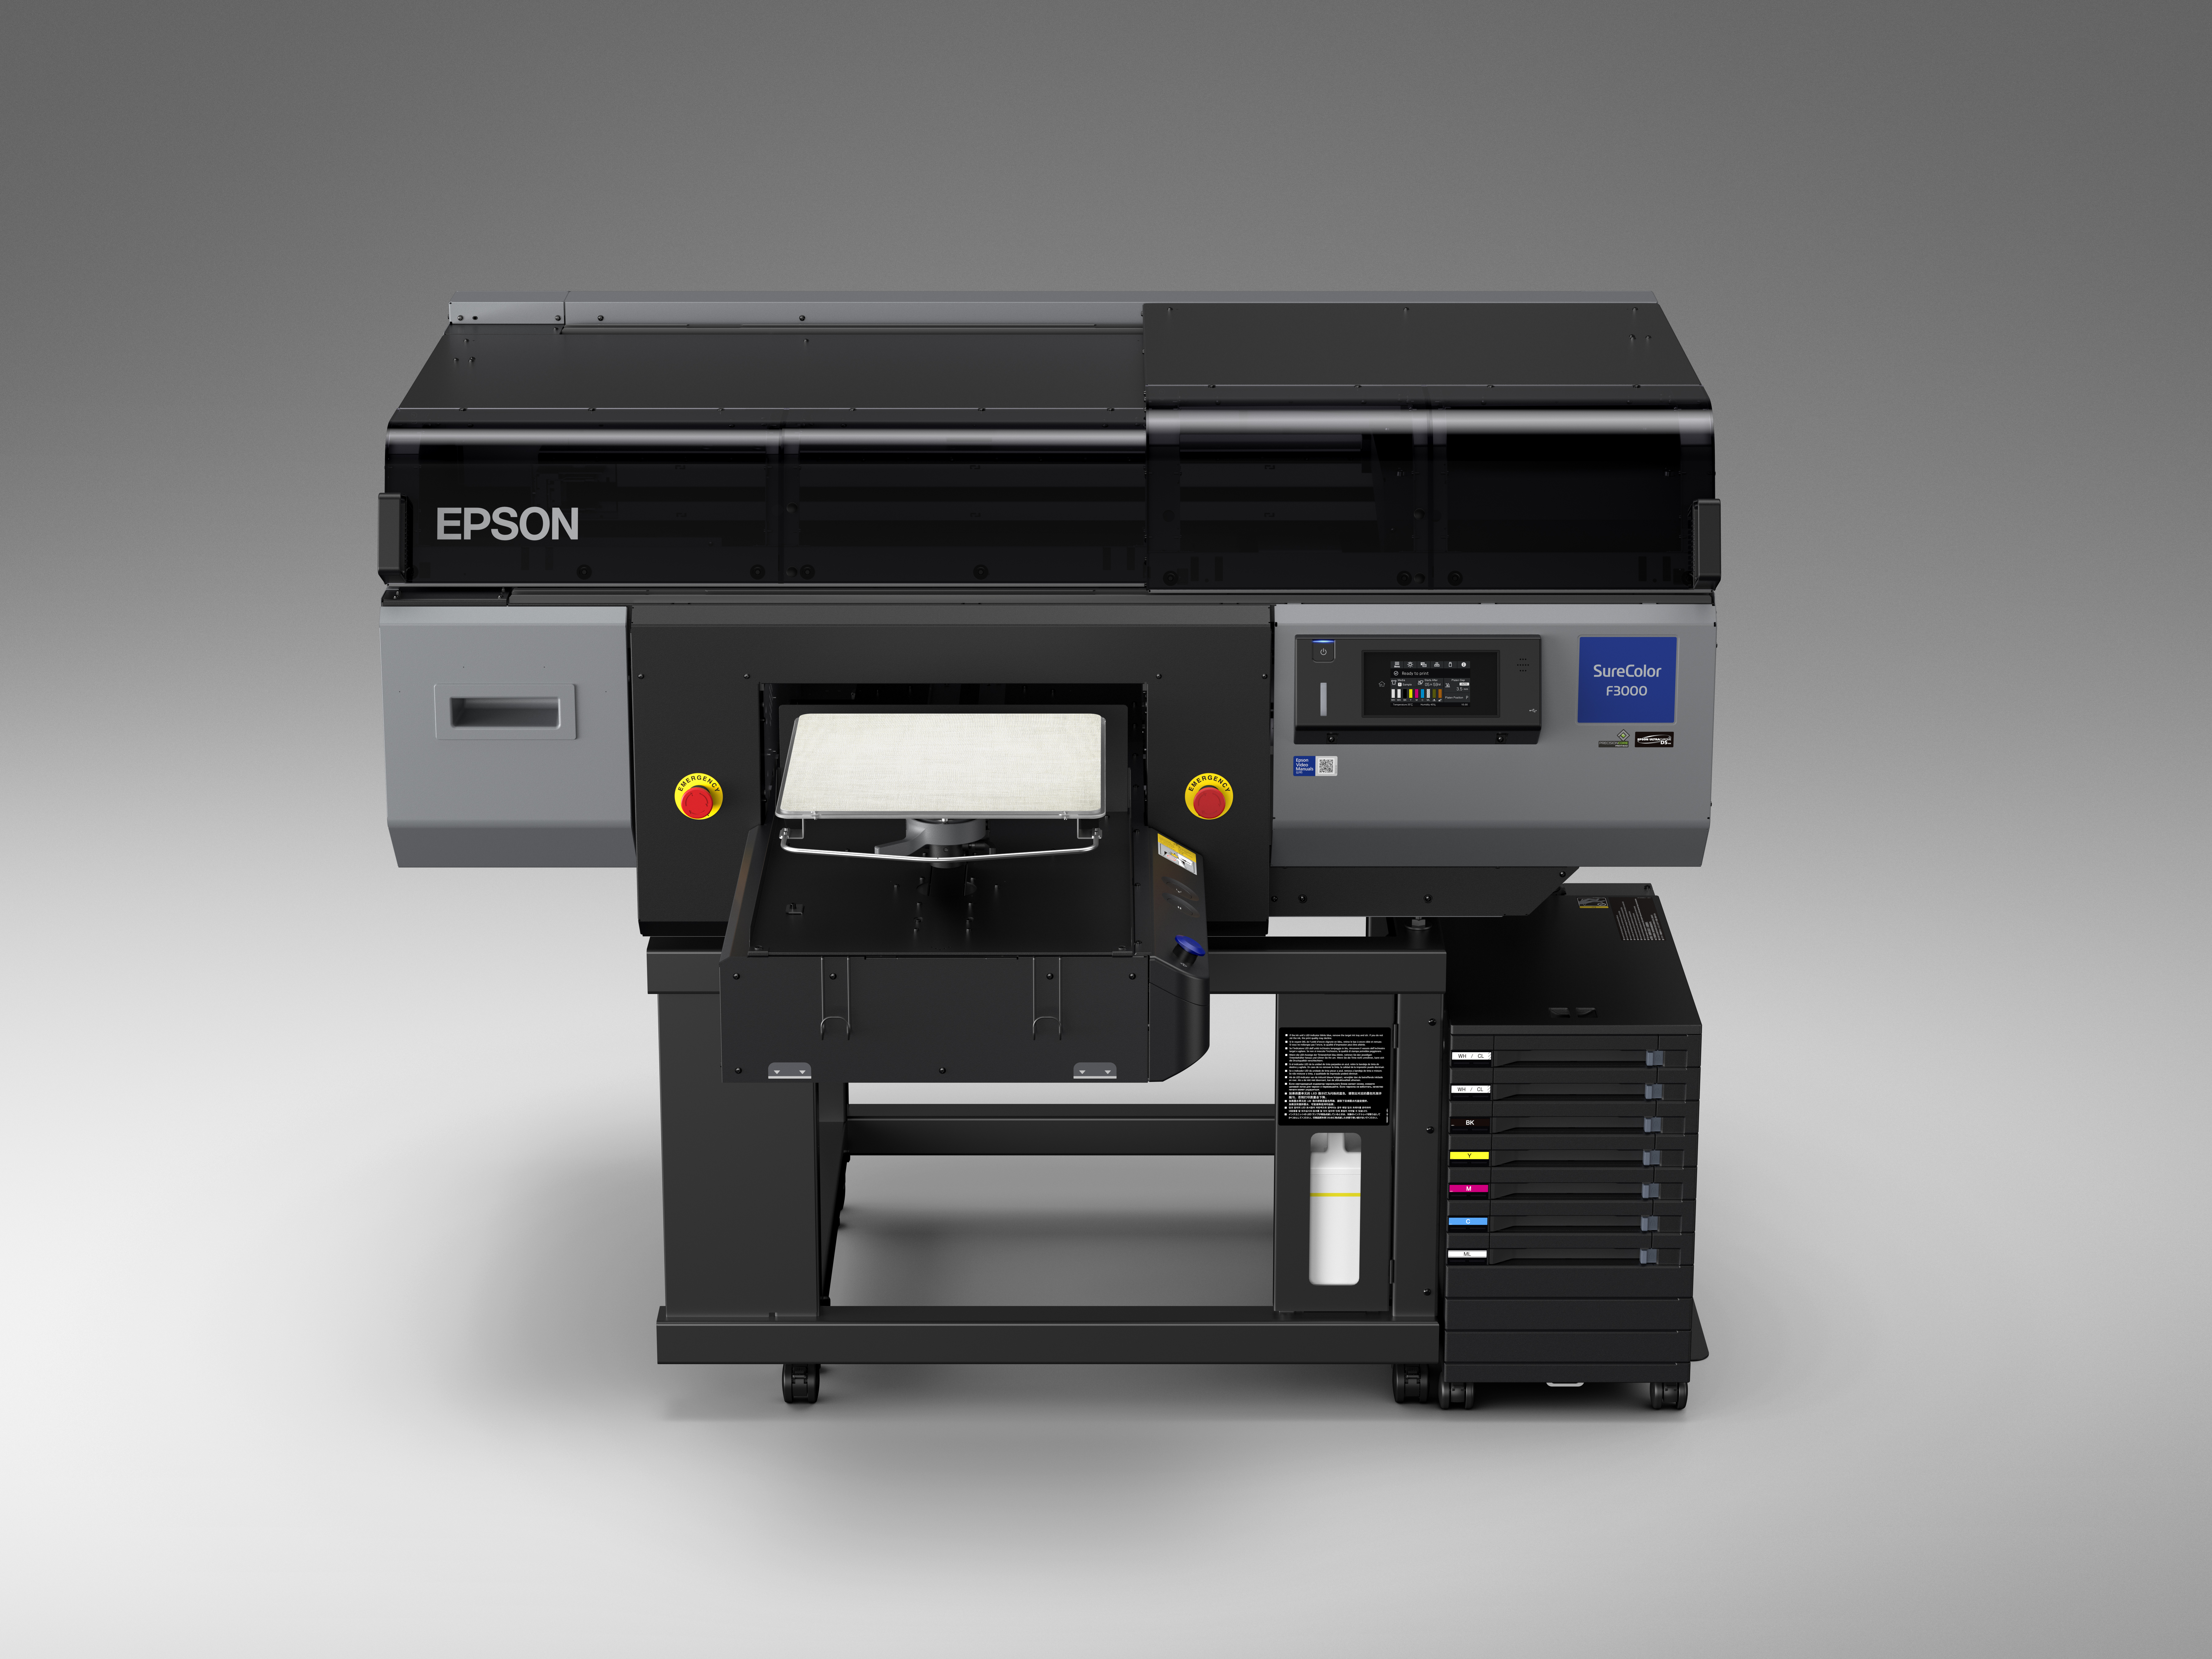 This machine can print ANY t-shirt design in seconds! (Roland VersaStudio  BT-12) 